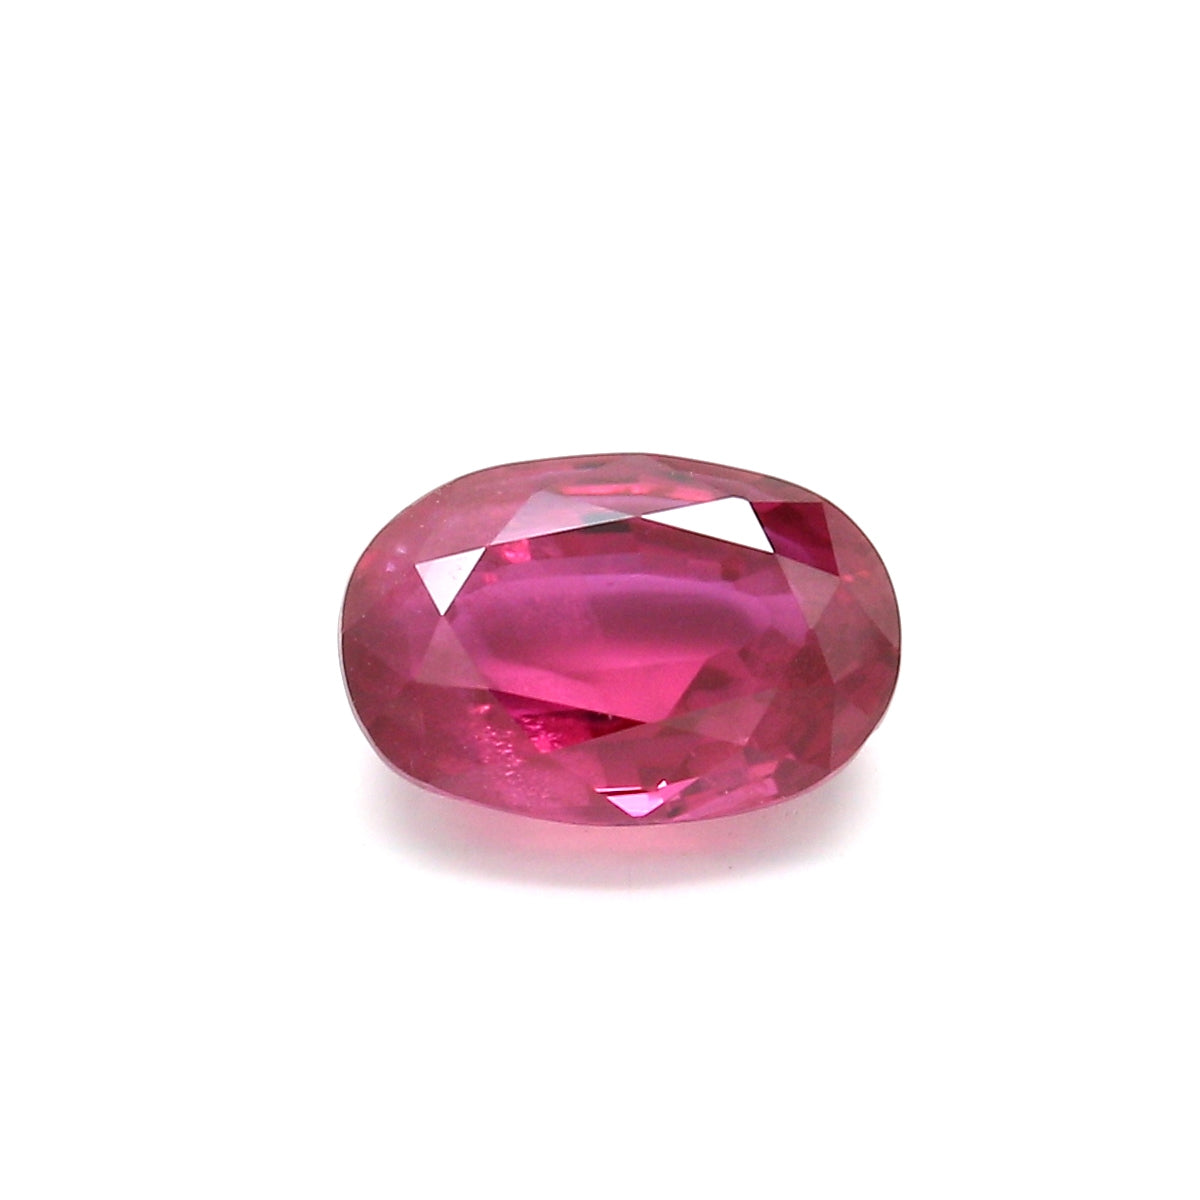 2.63ct Purplish Pink, Oval Sapphire, Heated, Thailand - 8.95 x 5.98 x 4.69mm